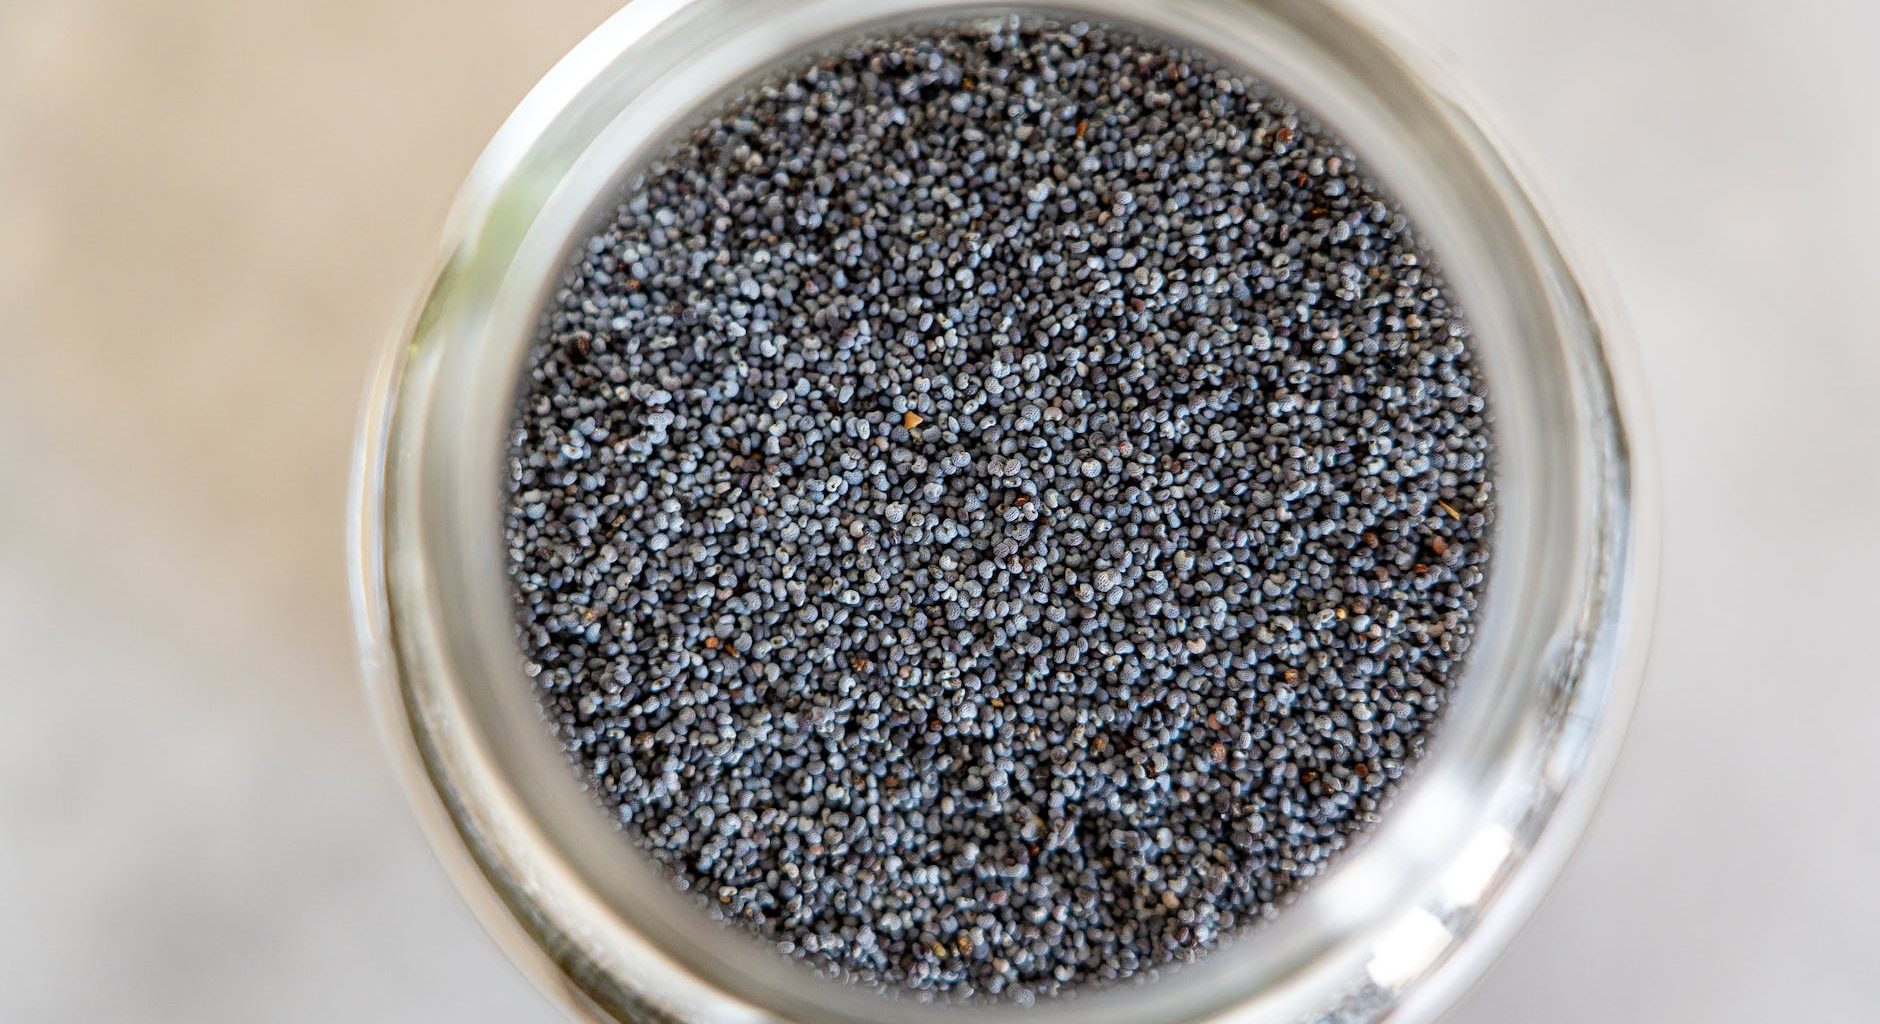 tiny size of seeds inside of a jar